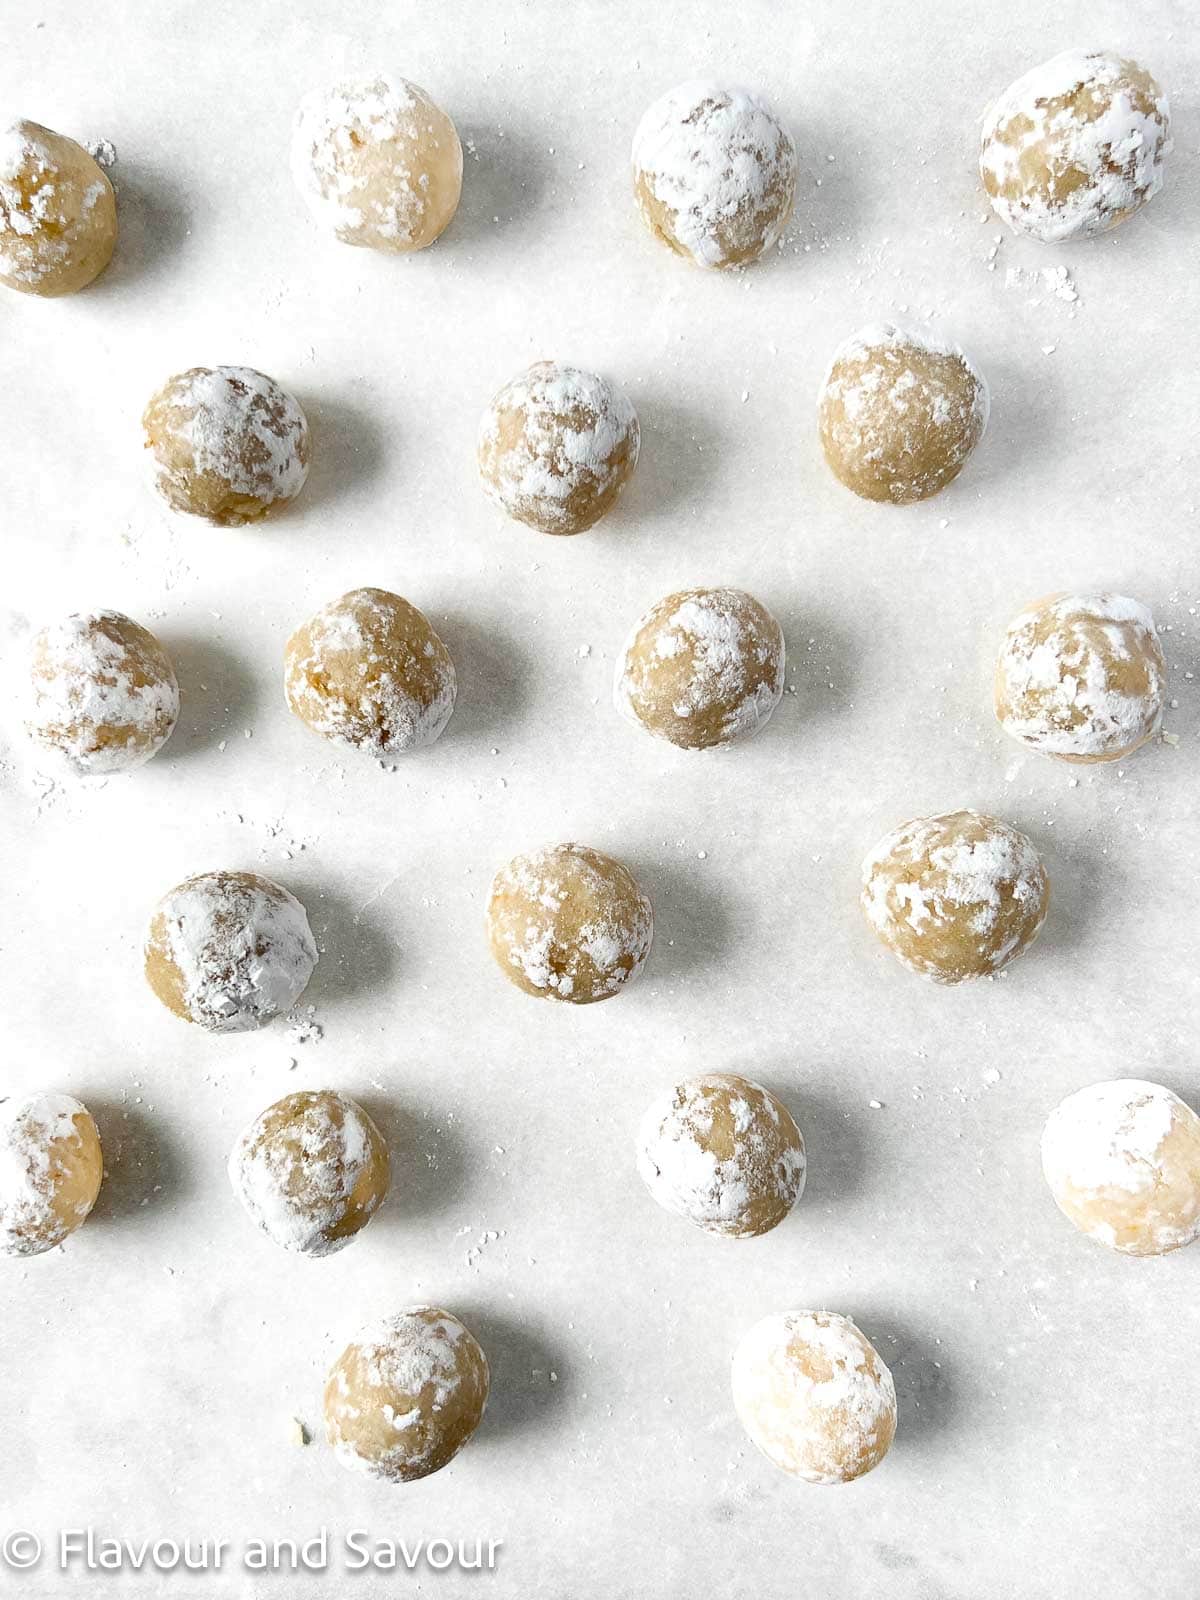 Almond cookie dough balls on a baking sheet, ready to bake.